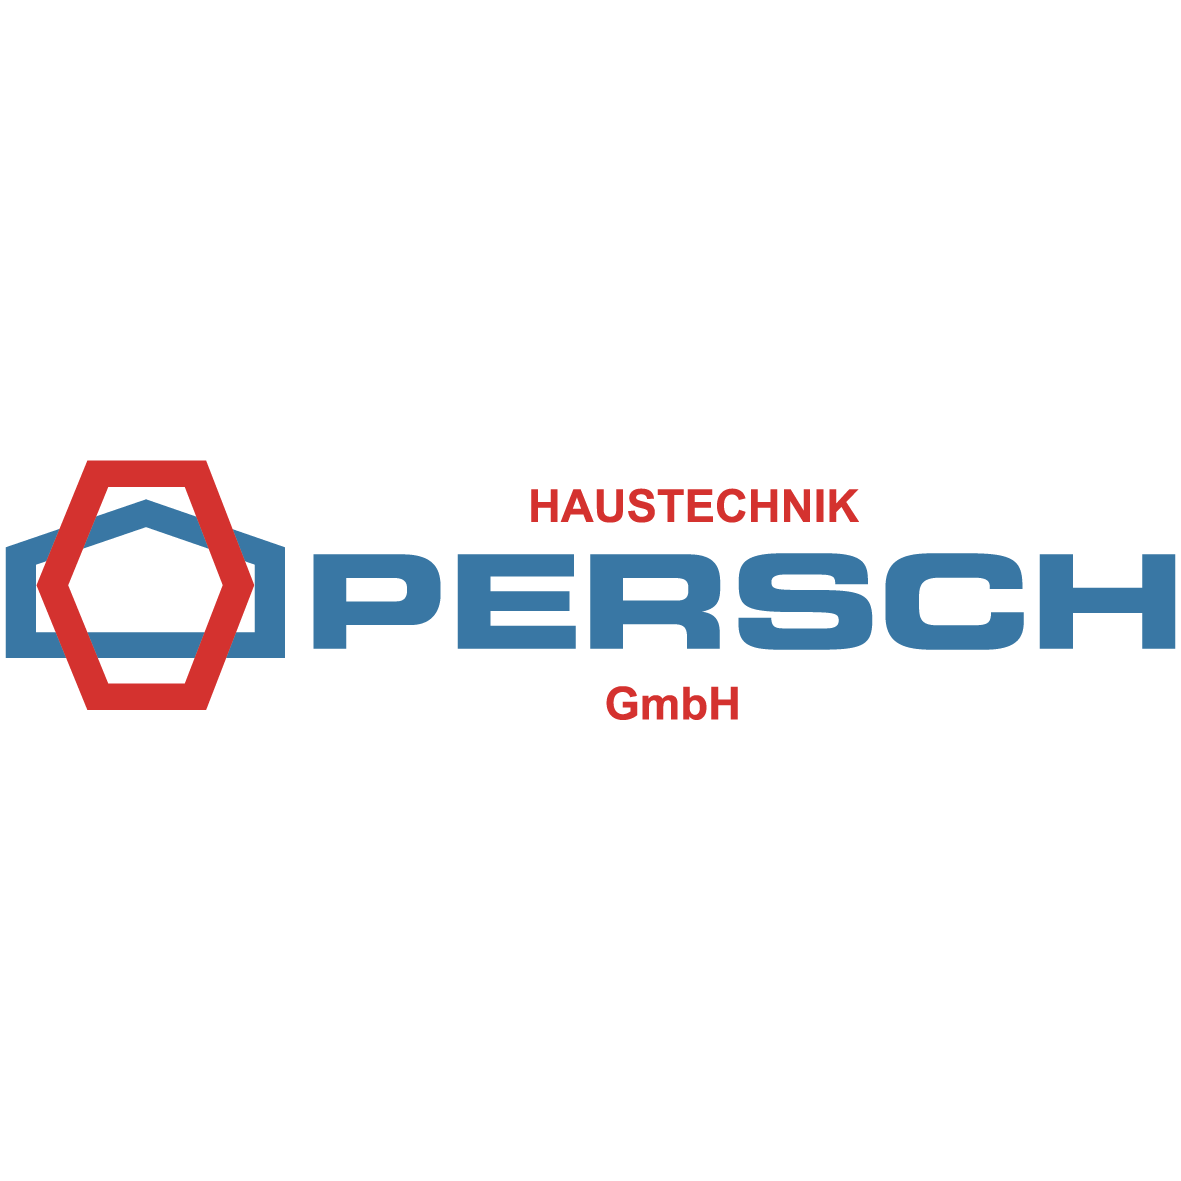 Haustechnik Persch GmbH  